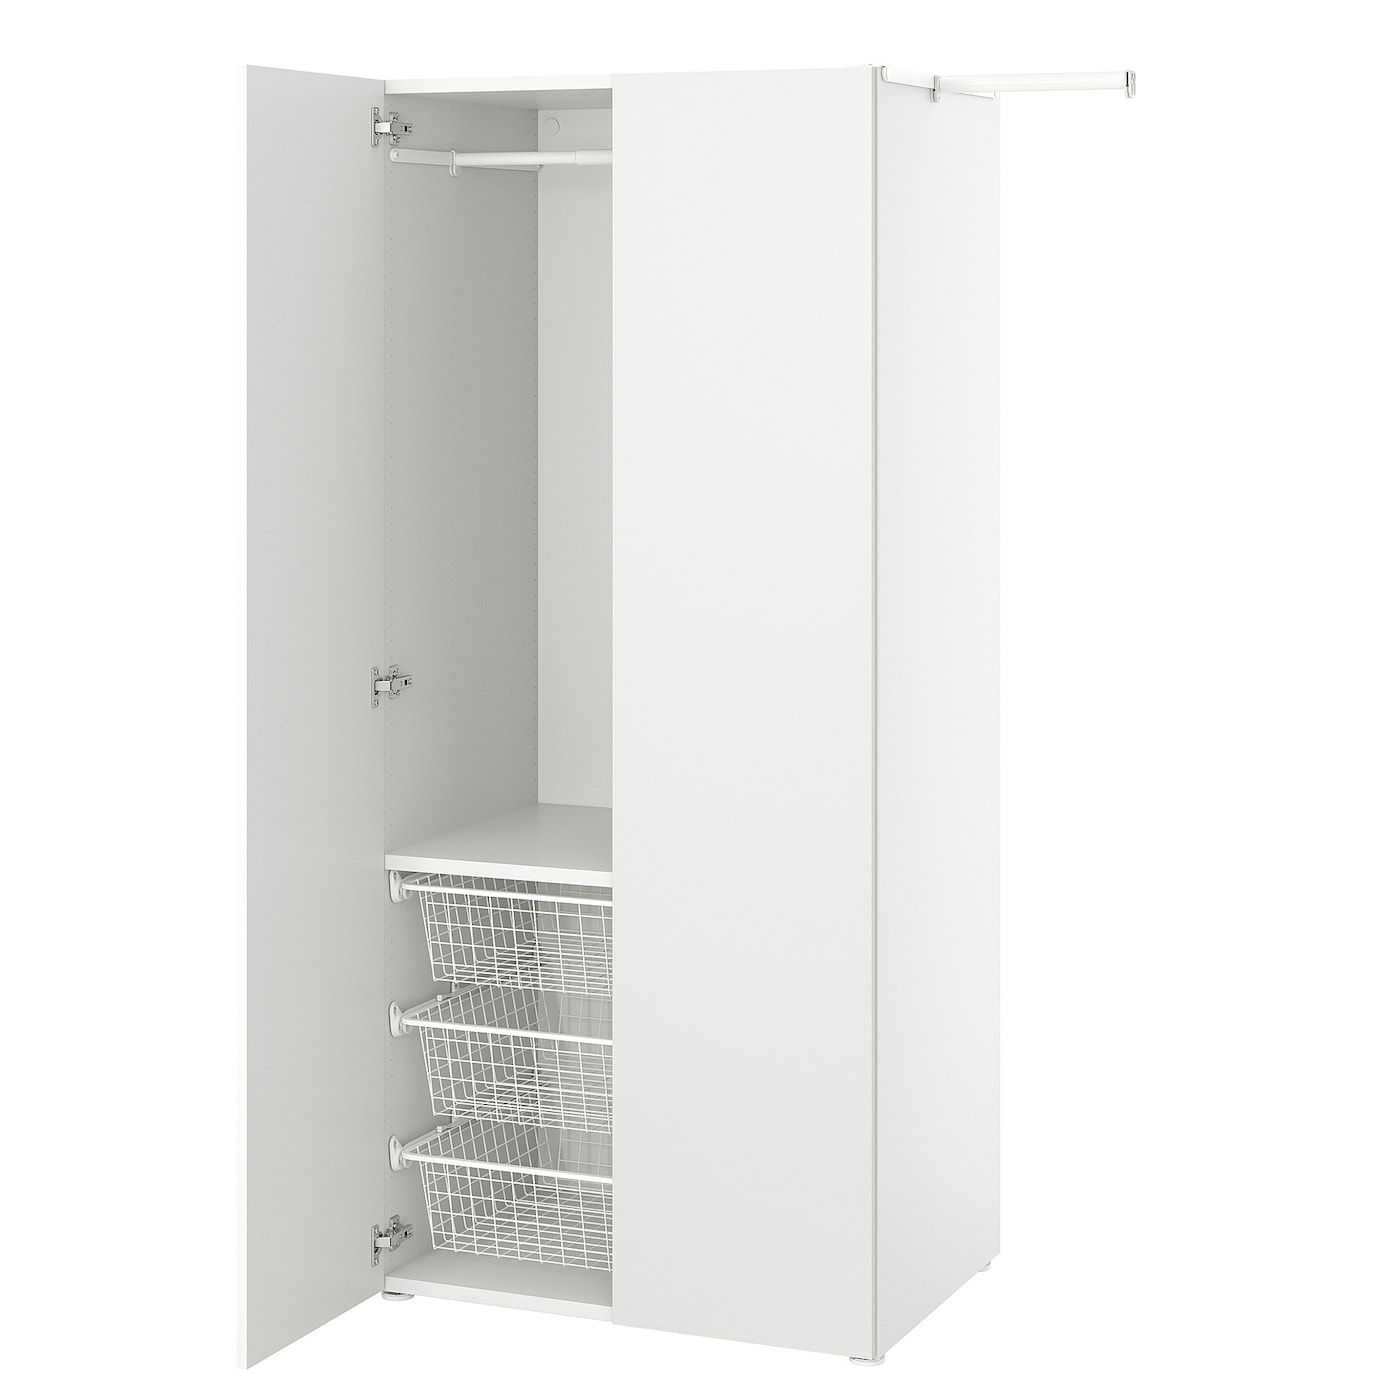 Платяной шкаф - IKEA PLATSA/FONNES  / ПЛАТСА/ФОННЕС ИКЕА, 127x57x181 см, белый